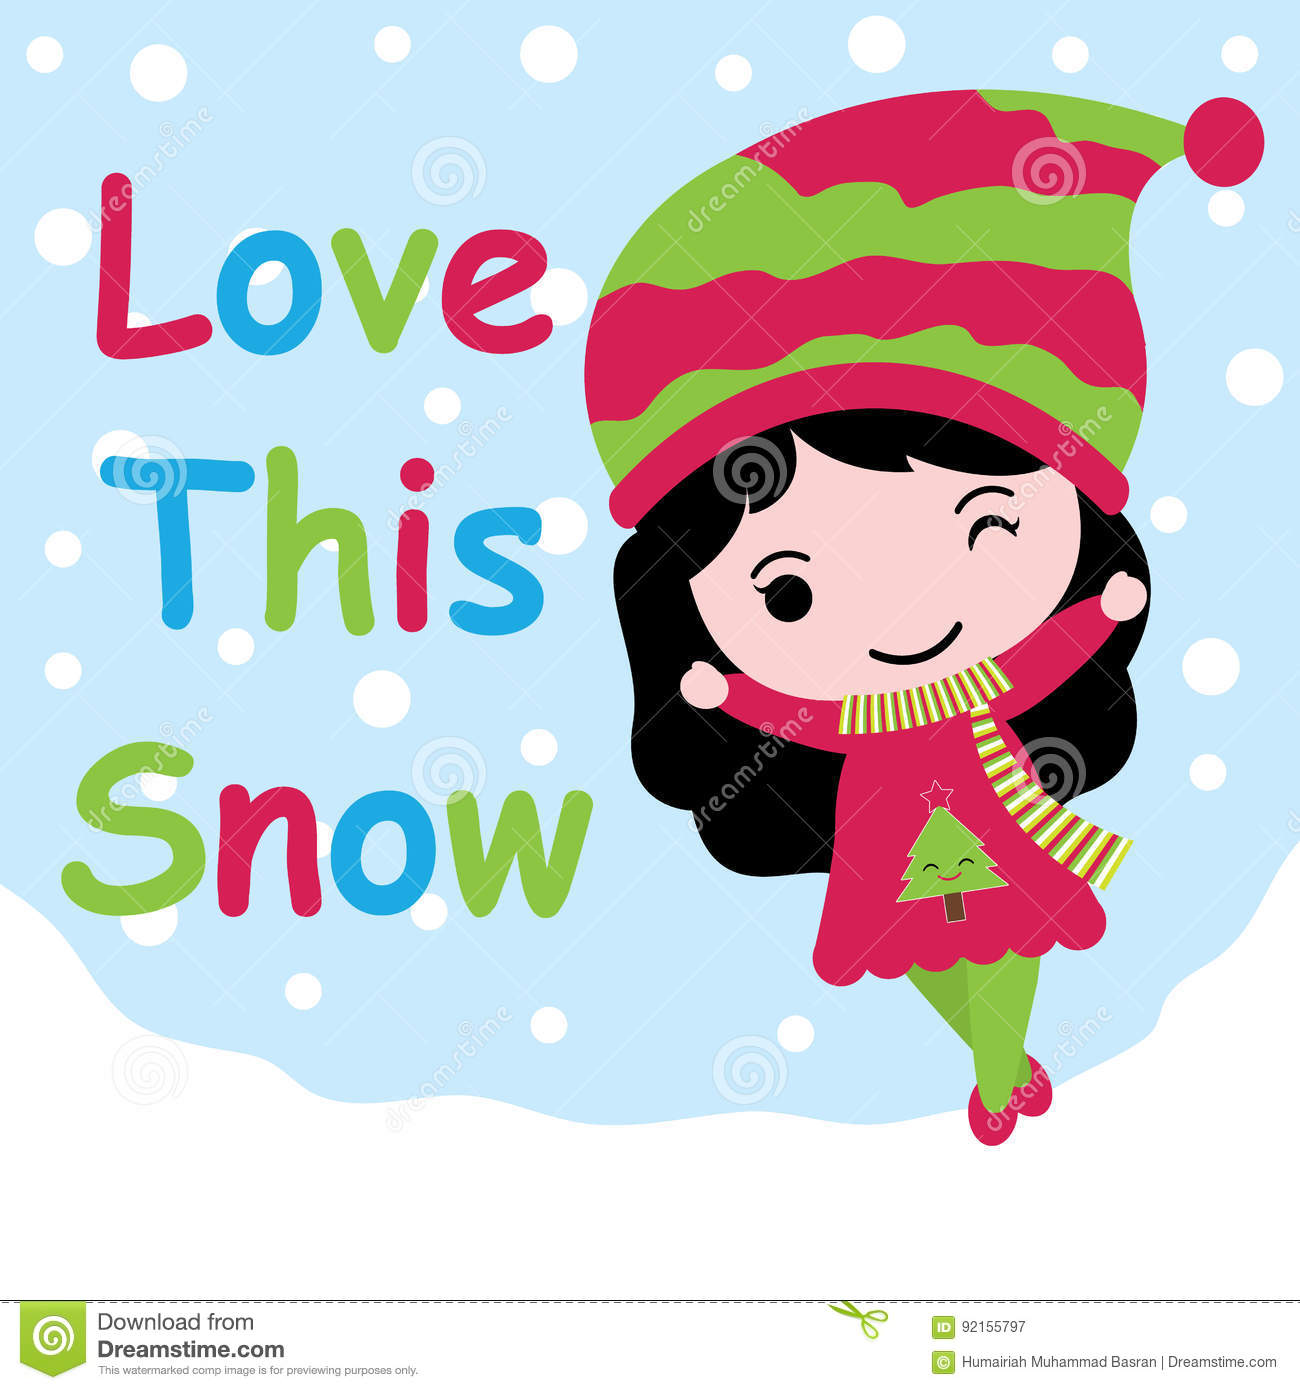 Download Free 100 + cute winter cartoon Wallpapers